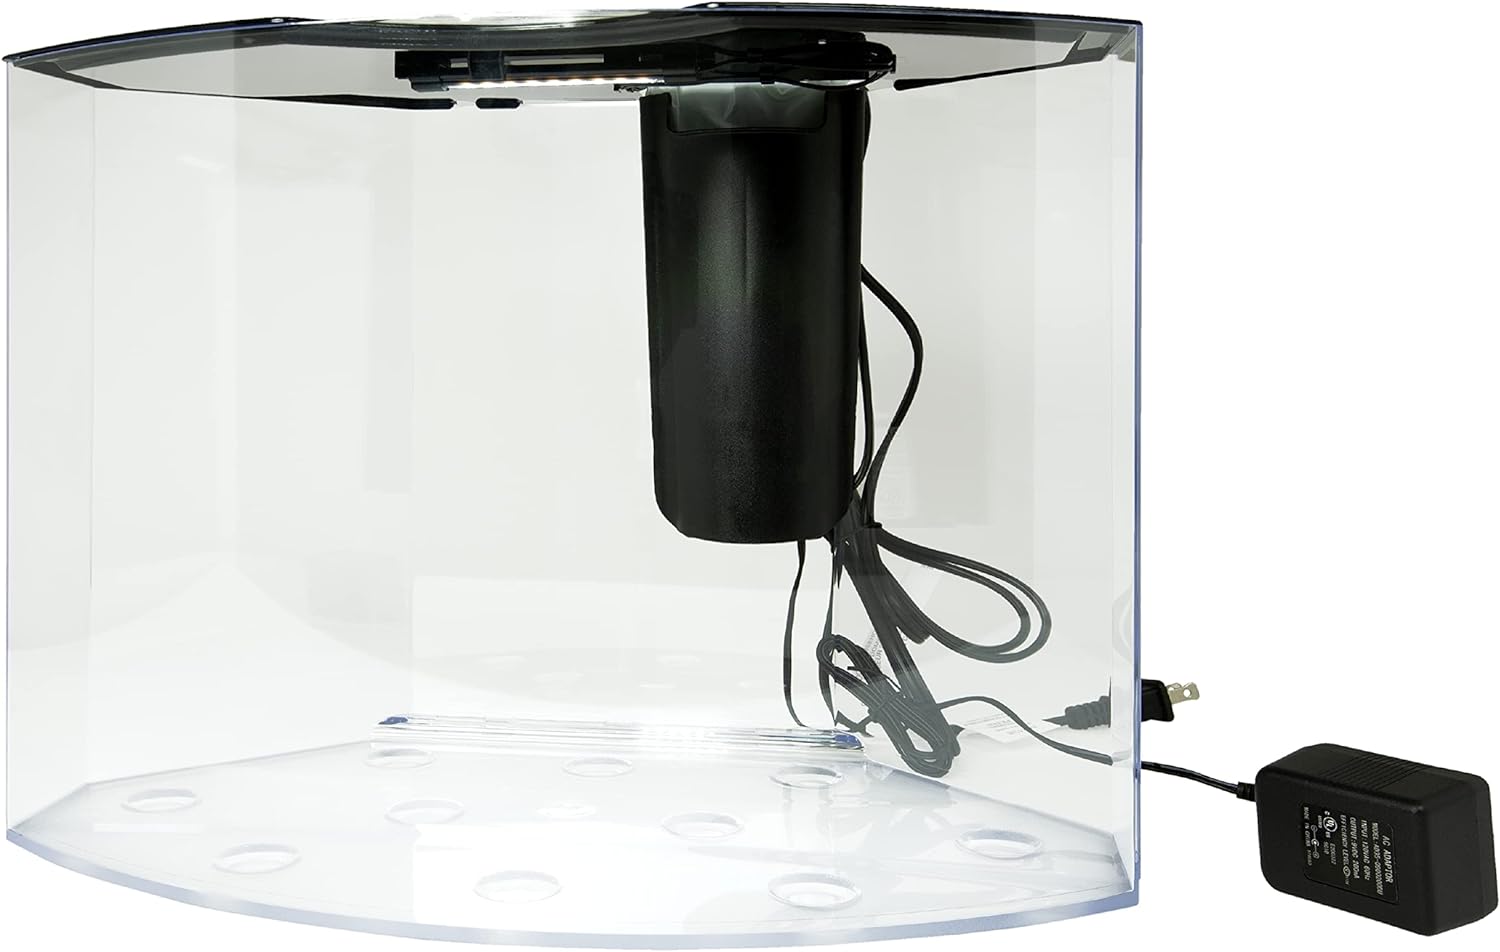 Tetra Crescent aquarium Kit 5 Gallons, Curved-Front Tank With LEDs,black